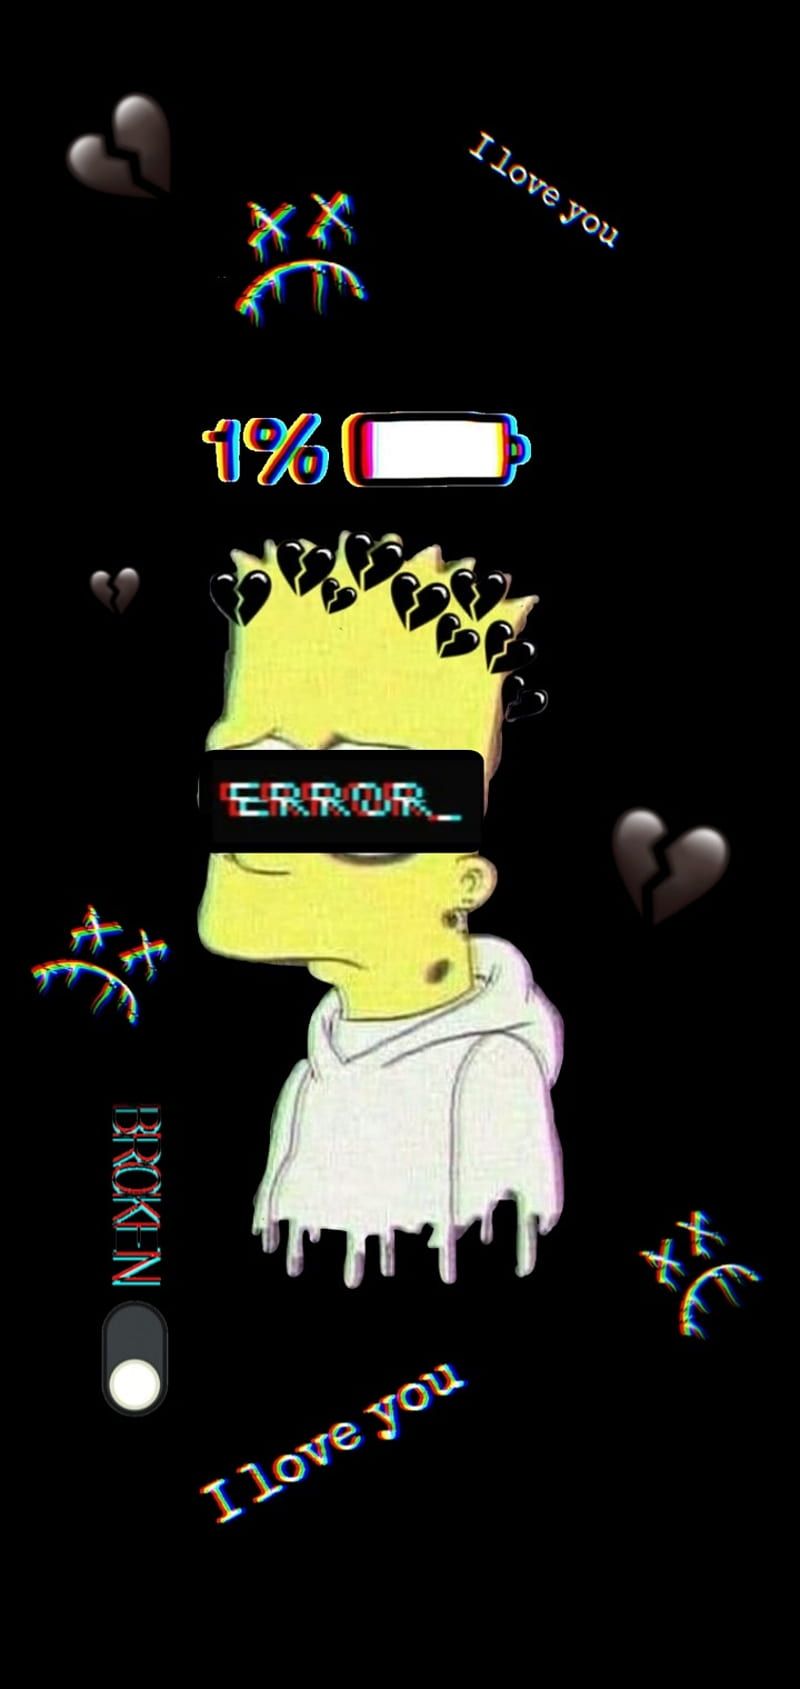 Bart simpson wallpaper, black background, i love you written in the middle, i love you written in the bottom - Bart Simpson, glitch